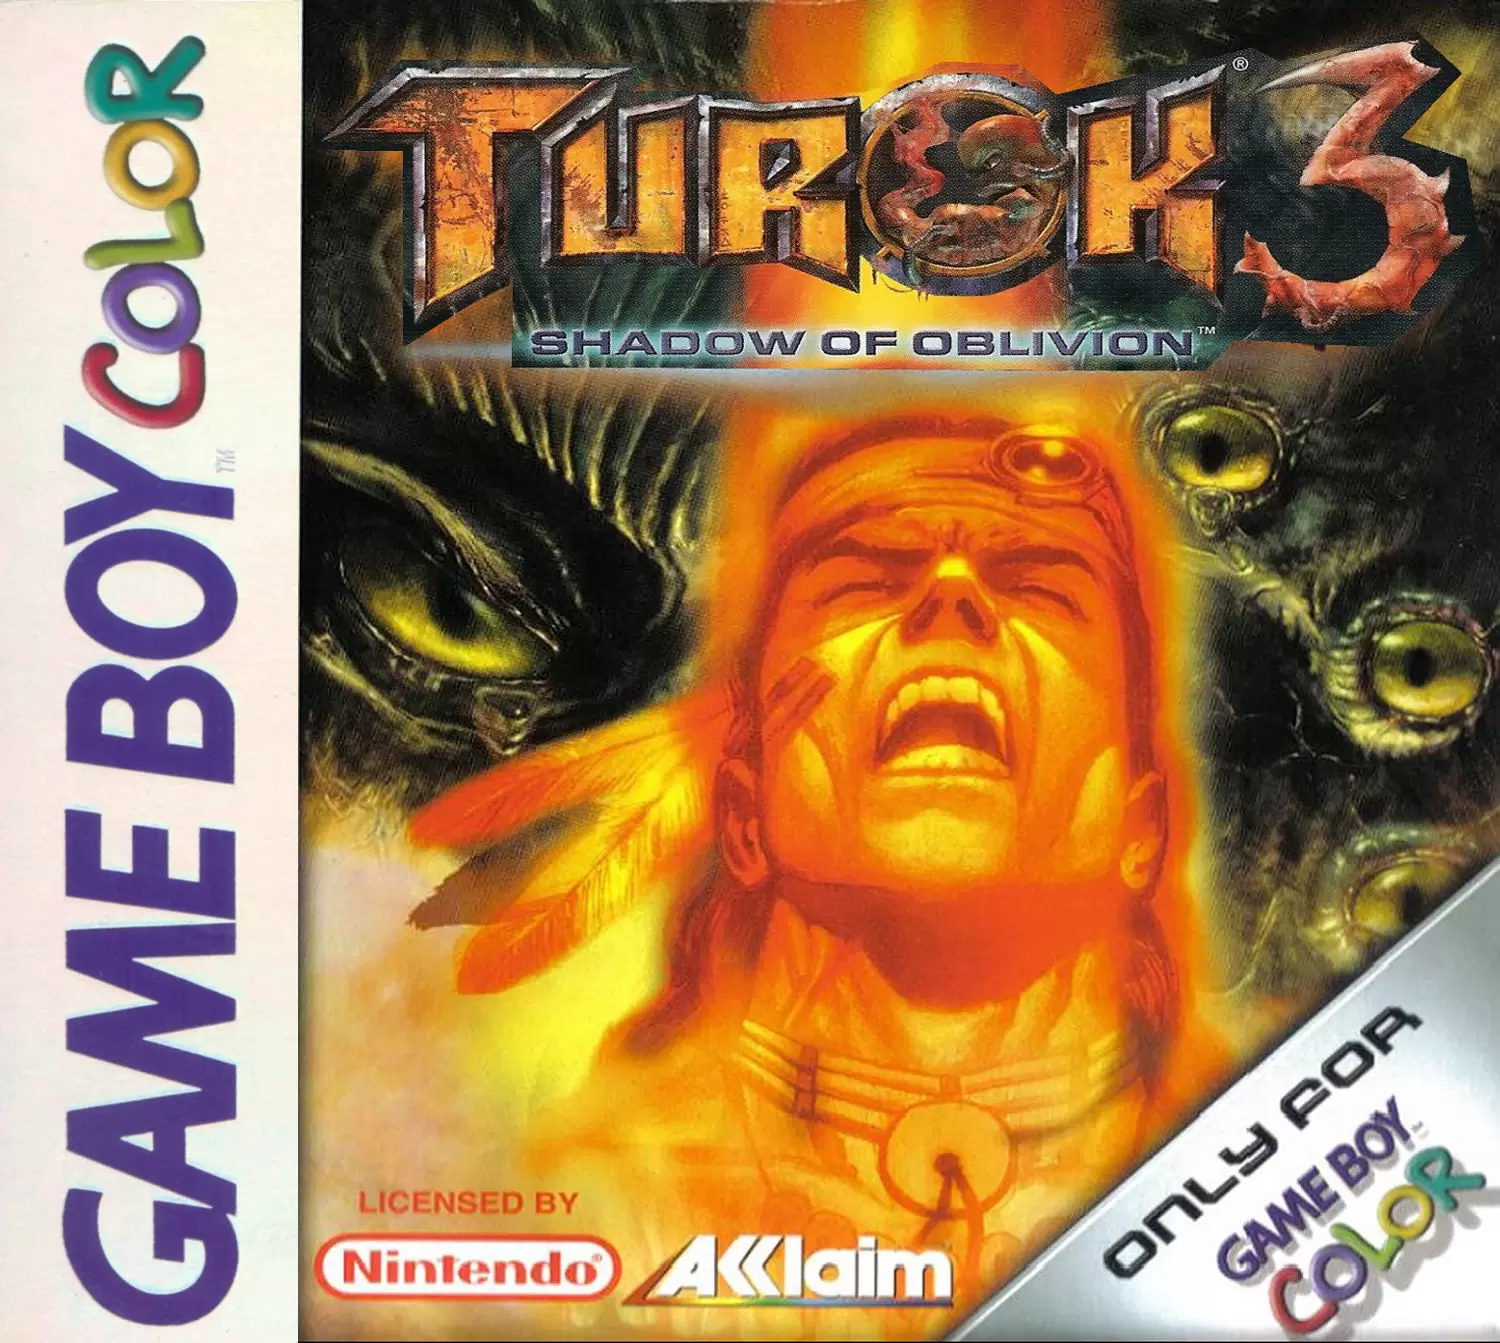 Game Boy Color Games - Turok 3: Shadow of Oblivion